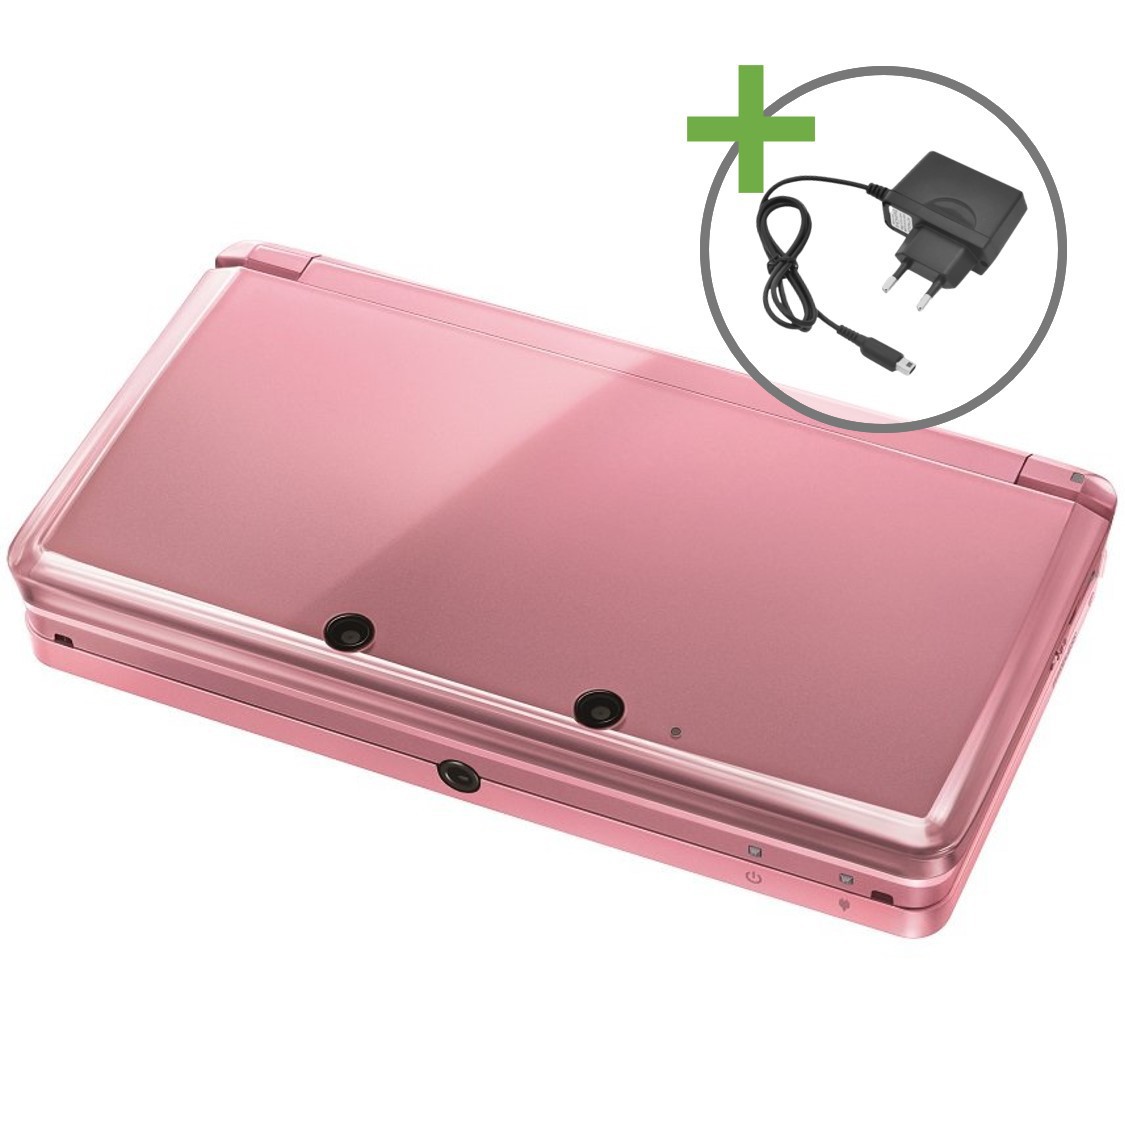 Nintendo 3DS - Coral Pink - Nintendögs + Cats Edition [Complete] - Nintendo 3DS Hardware - 3